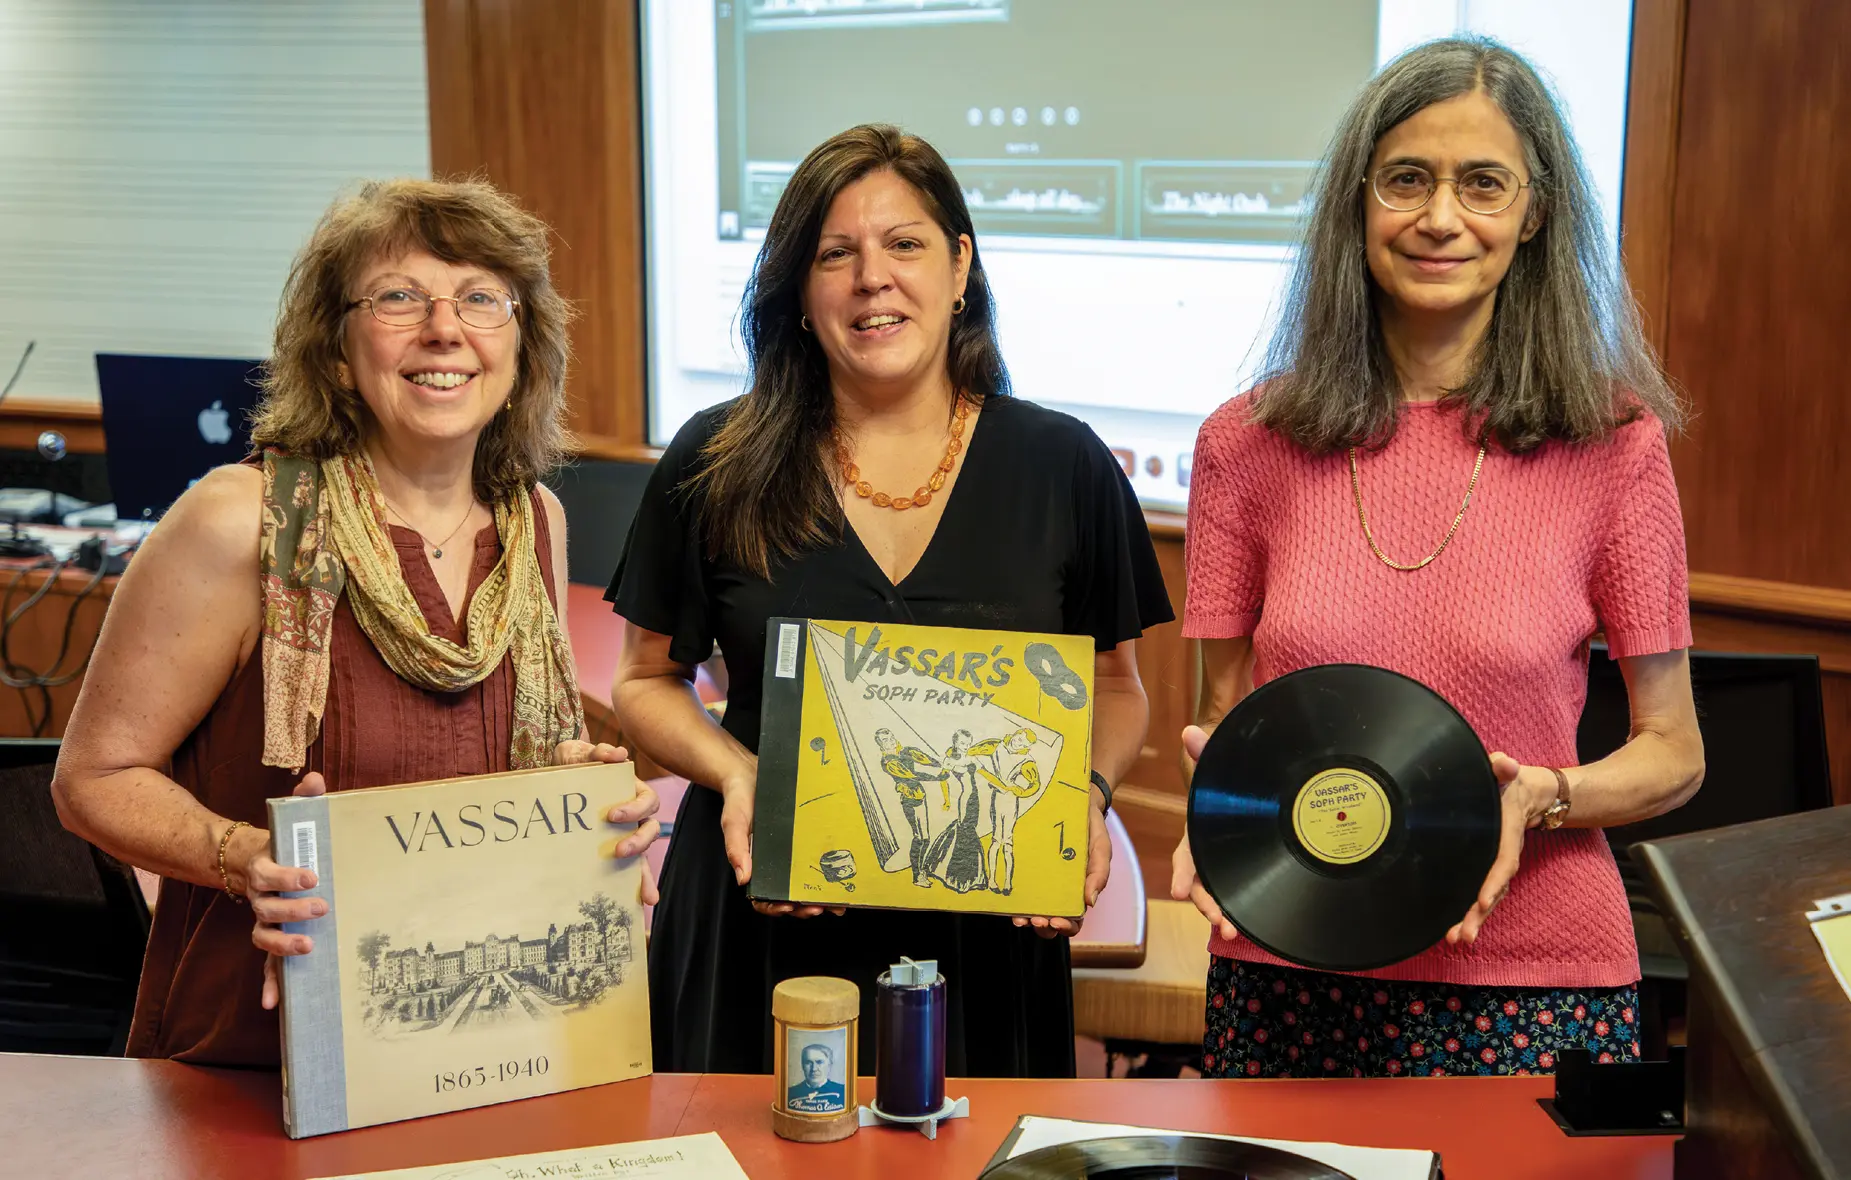 Sarah Canino, Nicole Scalessa with Ann Churukian smiling holing vinyl records